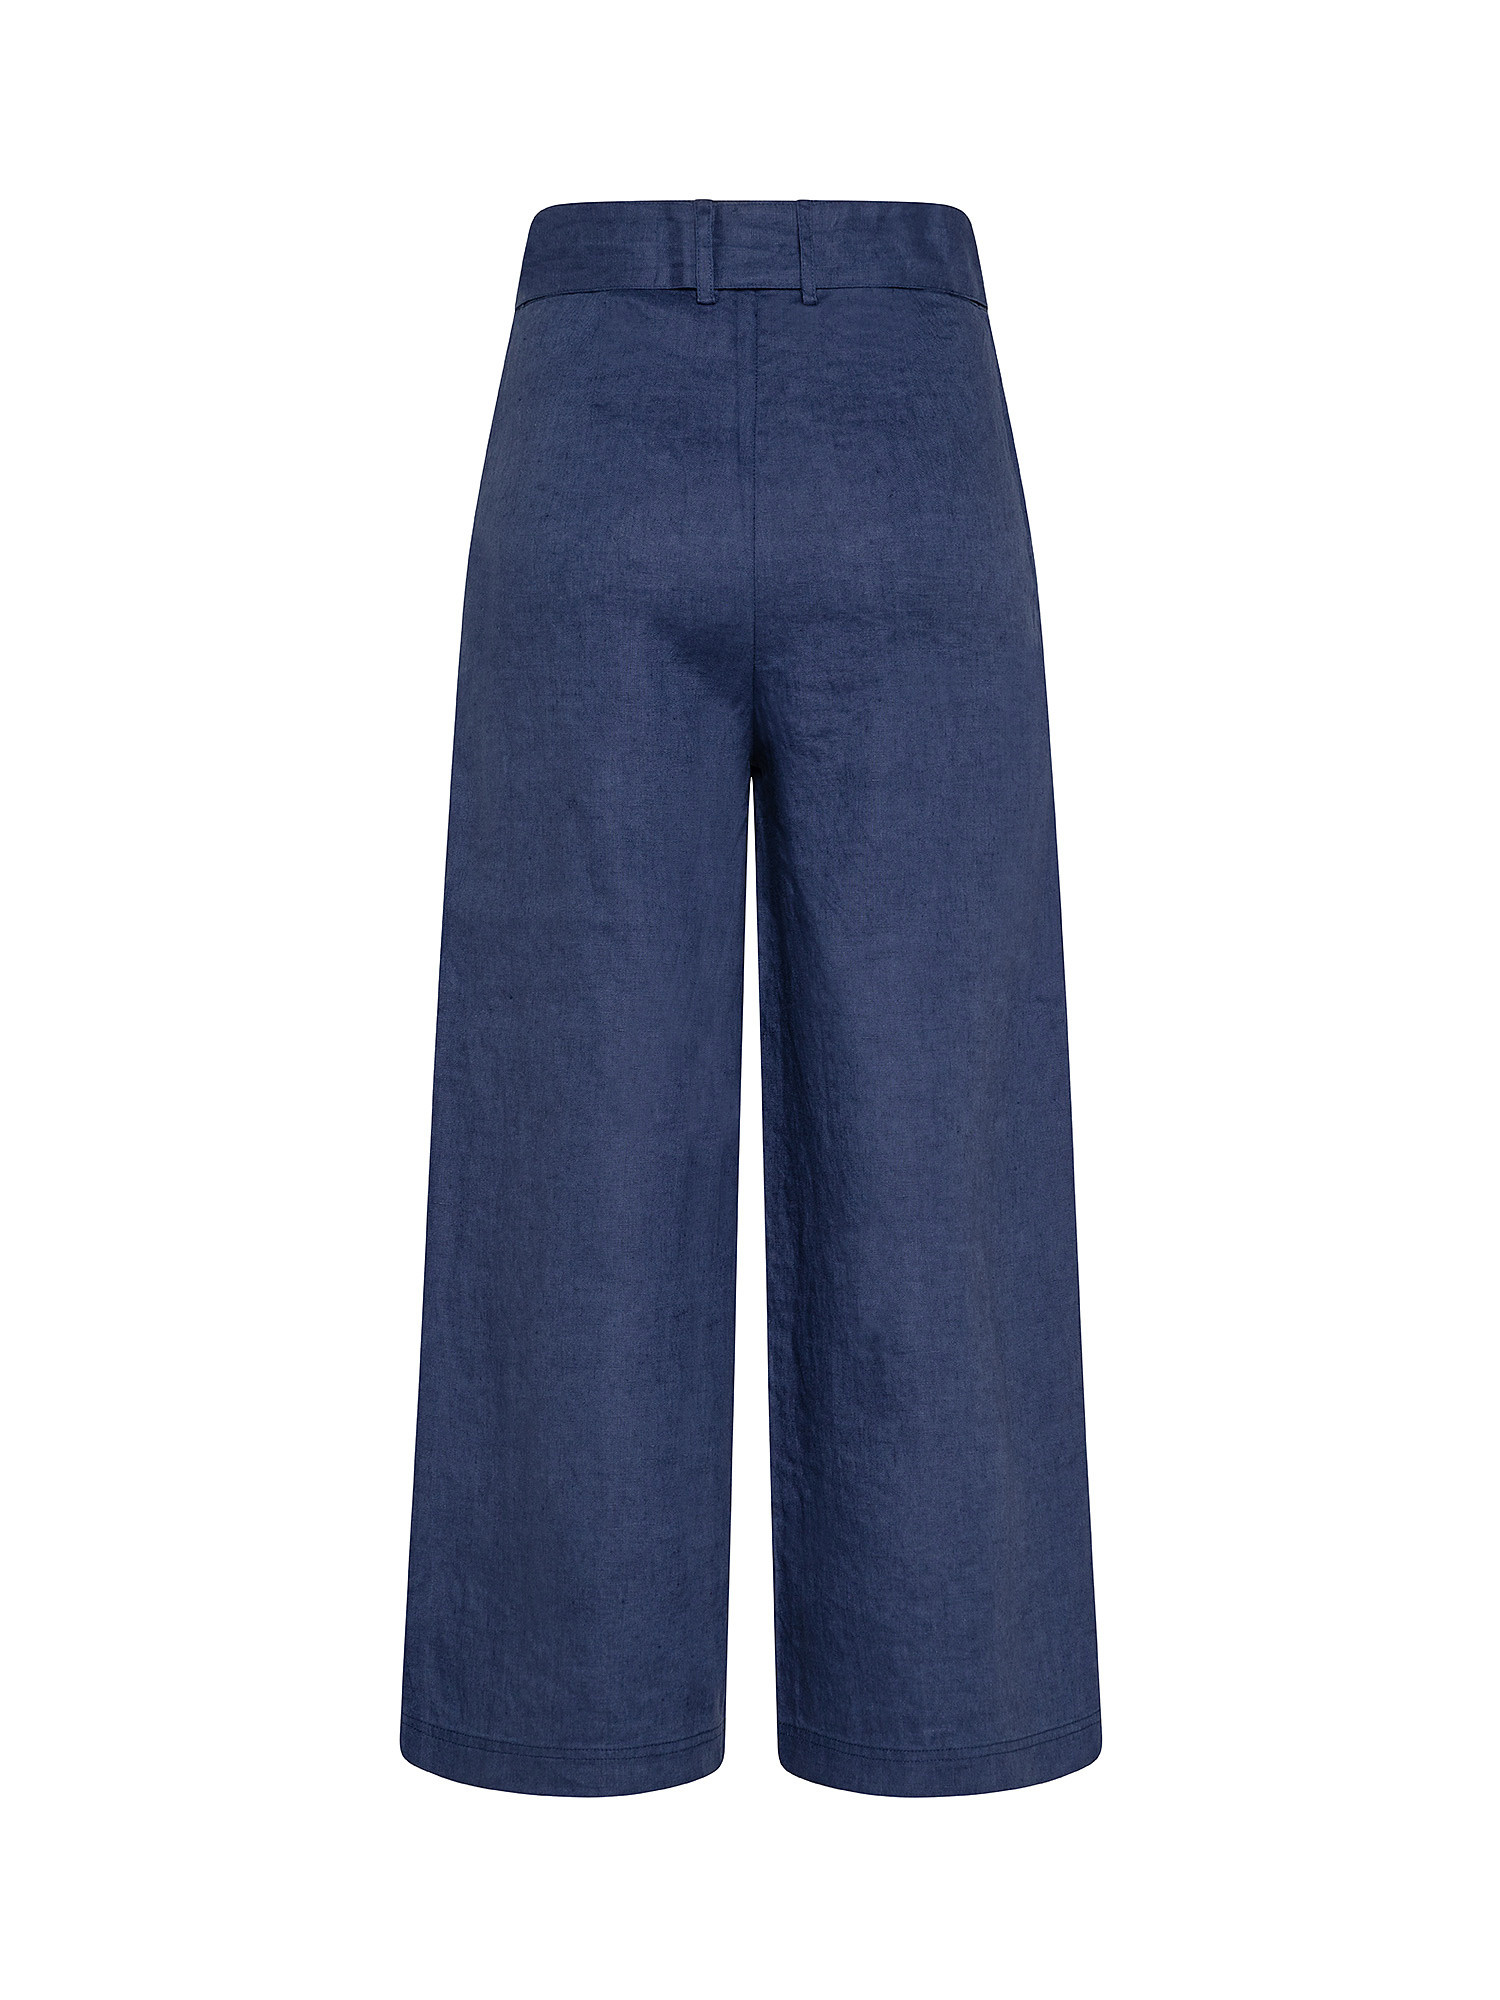 Pantalone 3/4 puro lino con cintura, Blu, large image number 1